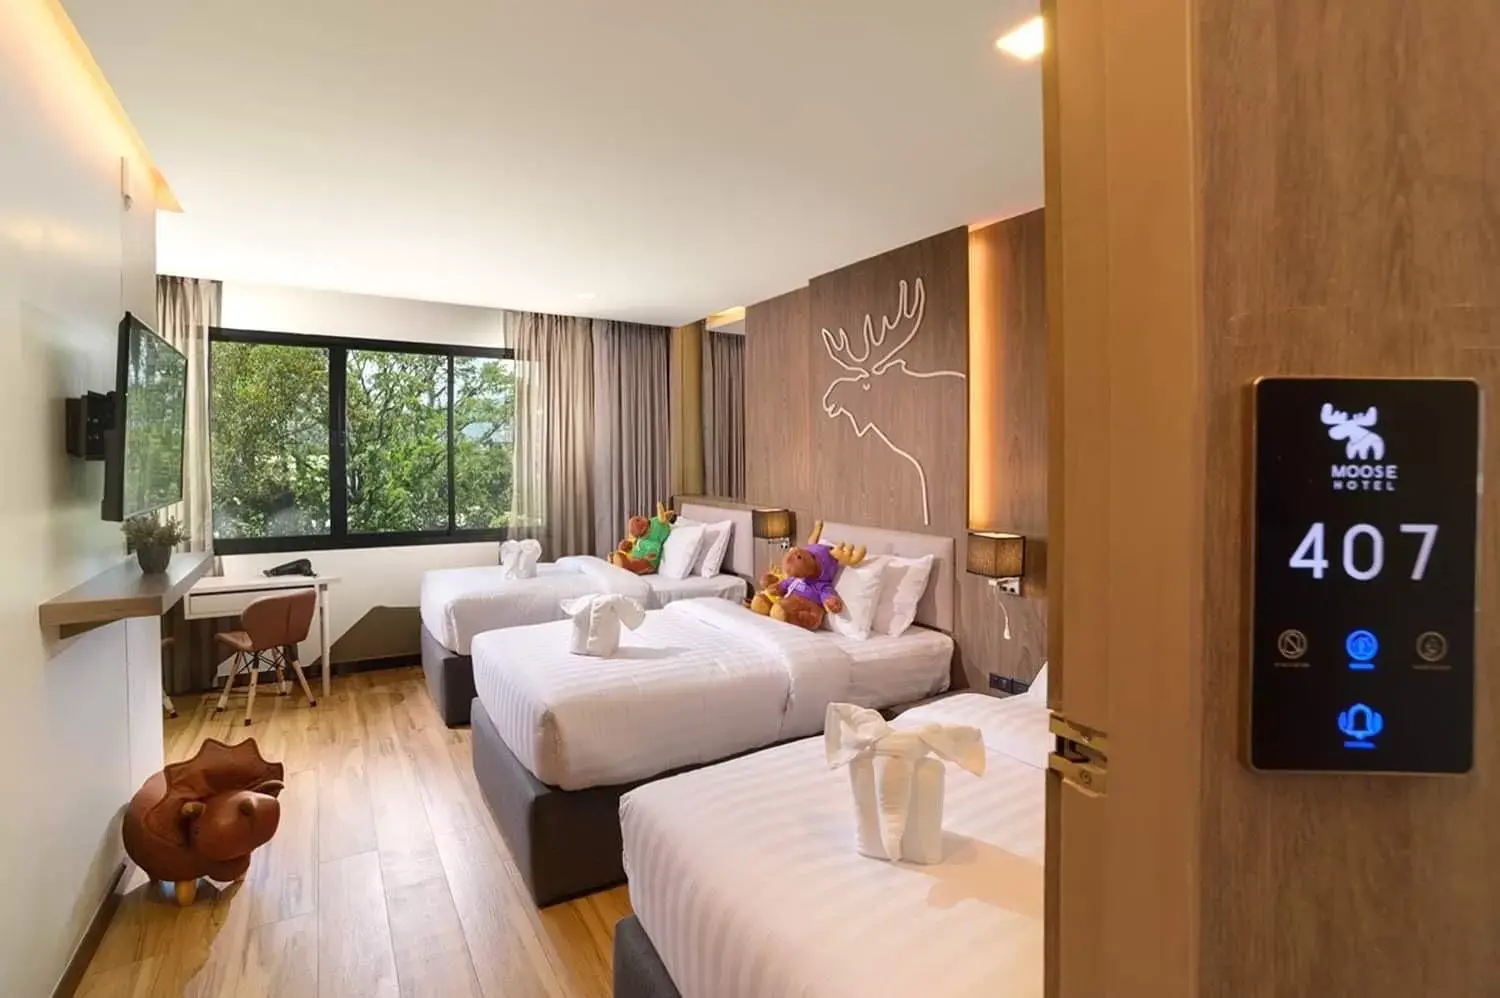 Bedroom in Moose Hotel Chiangmai